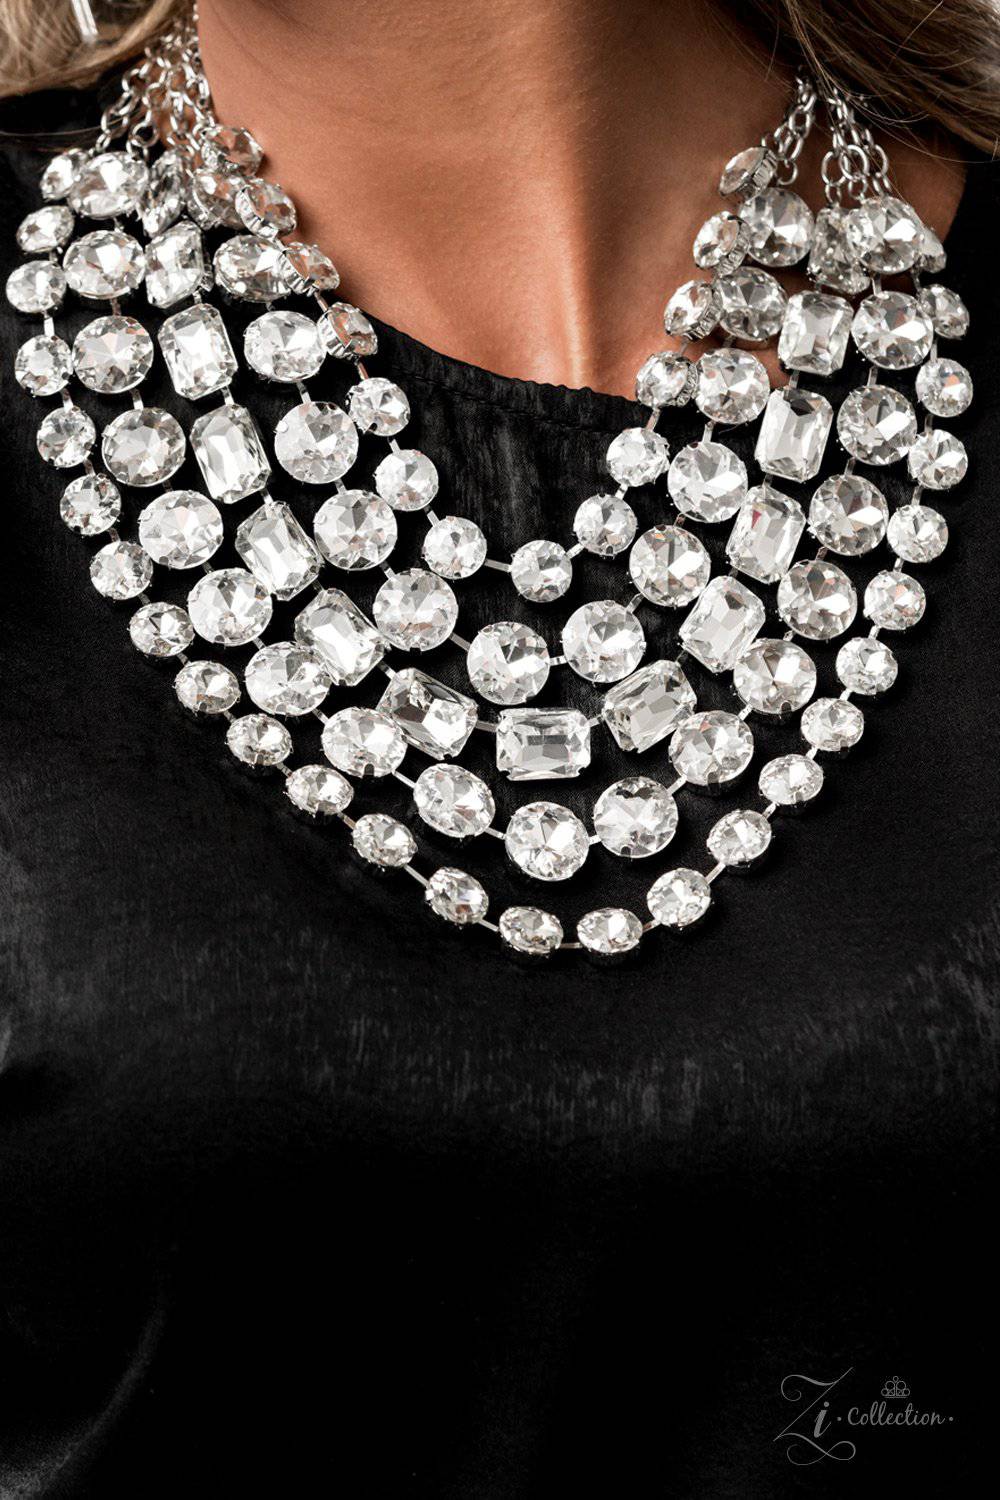 Irresistible - 2020 Zi Collection Necklace Set - Paparazzi Accessories - GlaMarous Titi Jewels